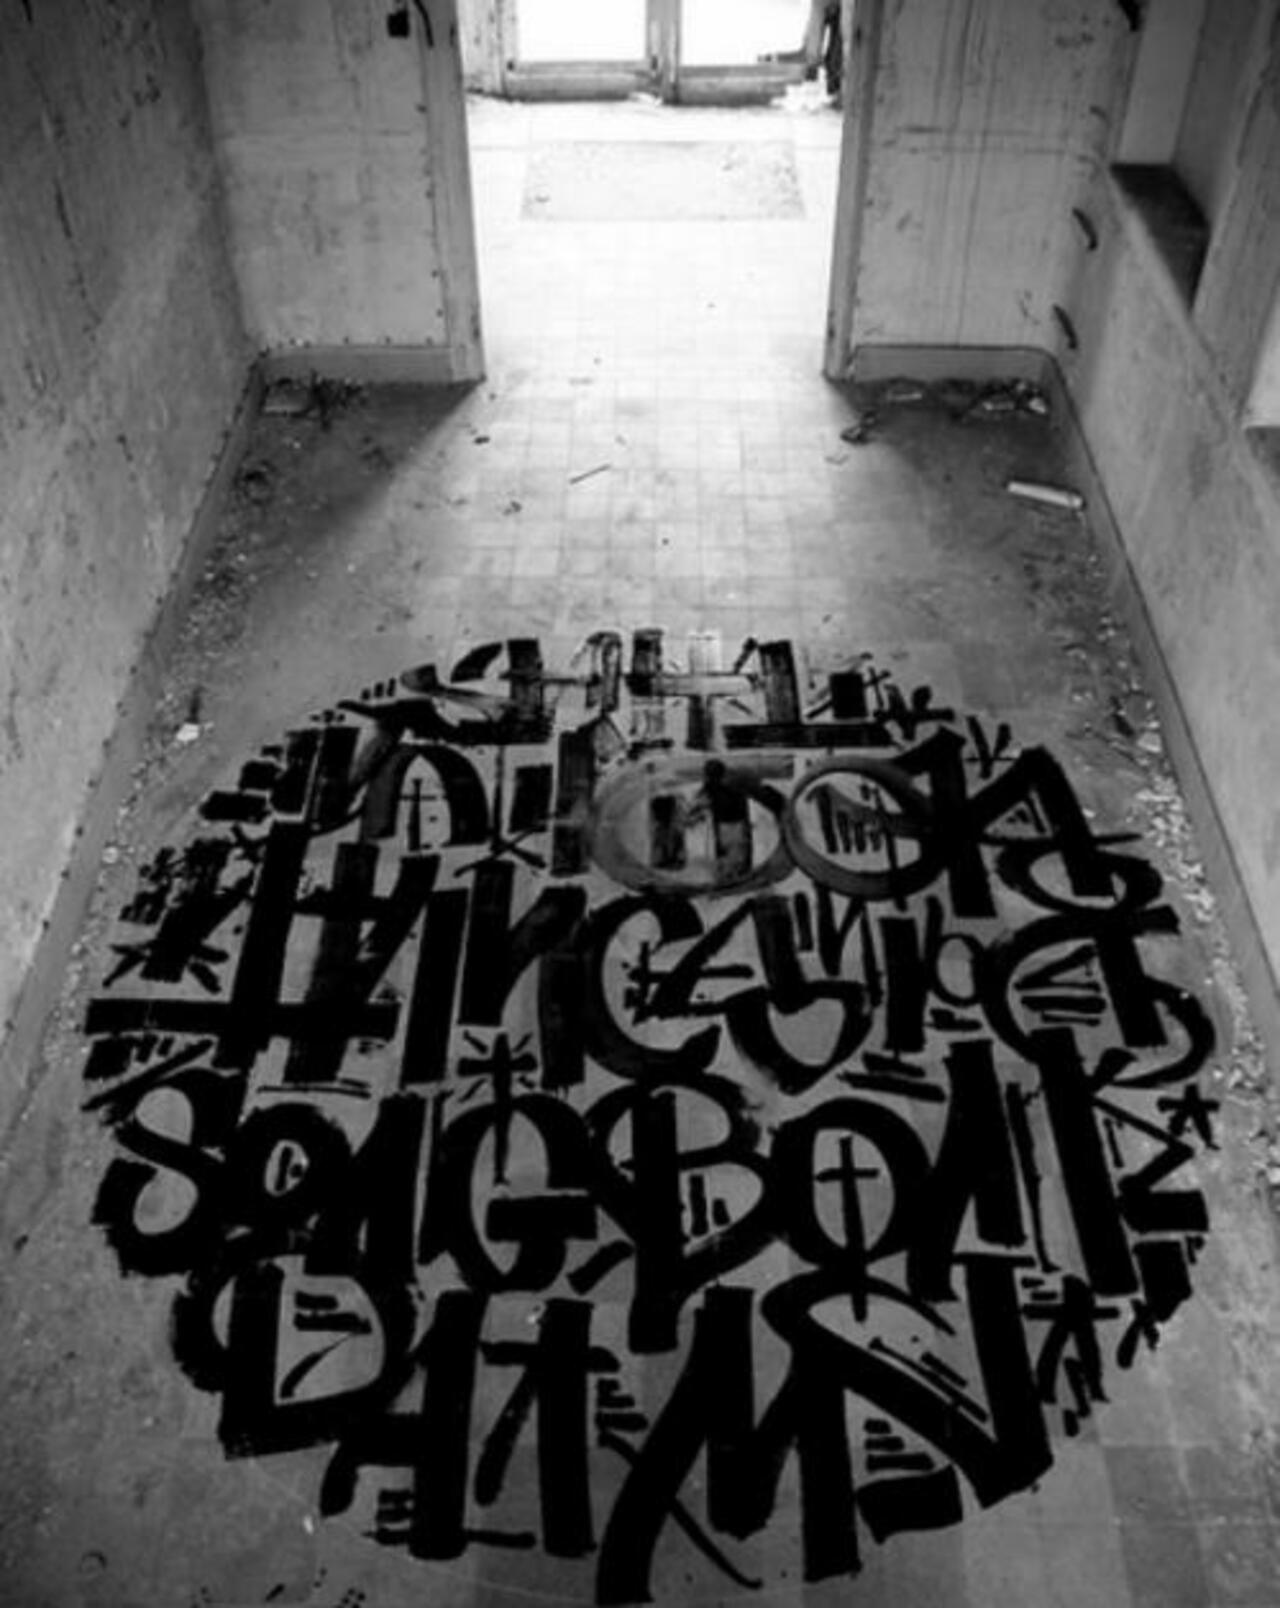 Sowat the mentals vapors

#Graffiti #StreetArt #Mural #painting #Urban #Art http://t.co/LmKmSRp5My